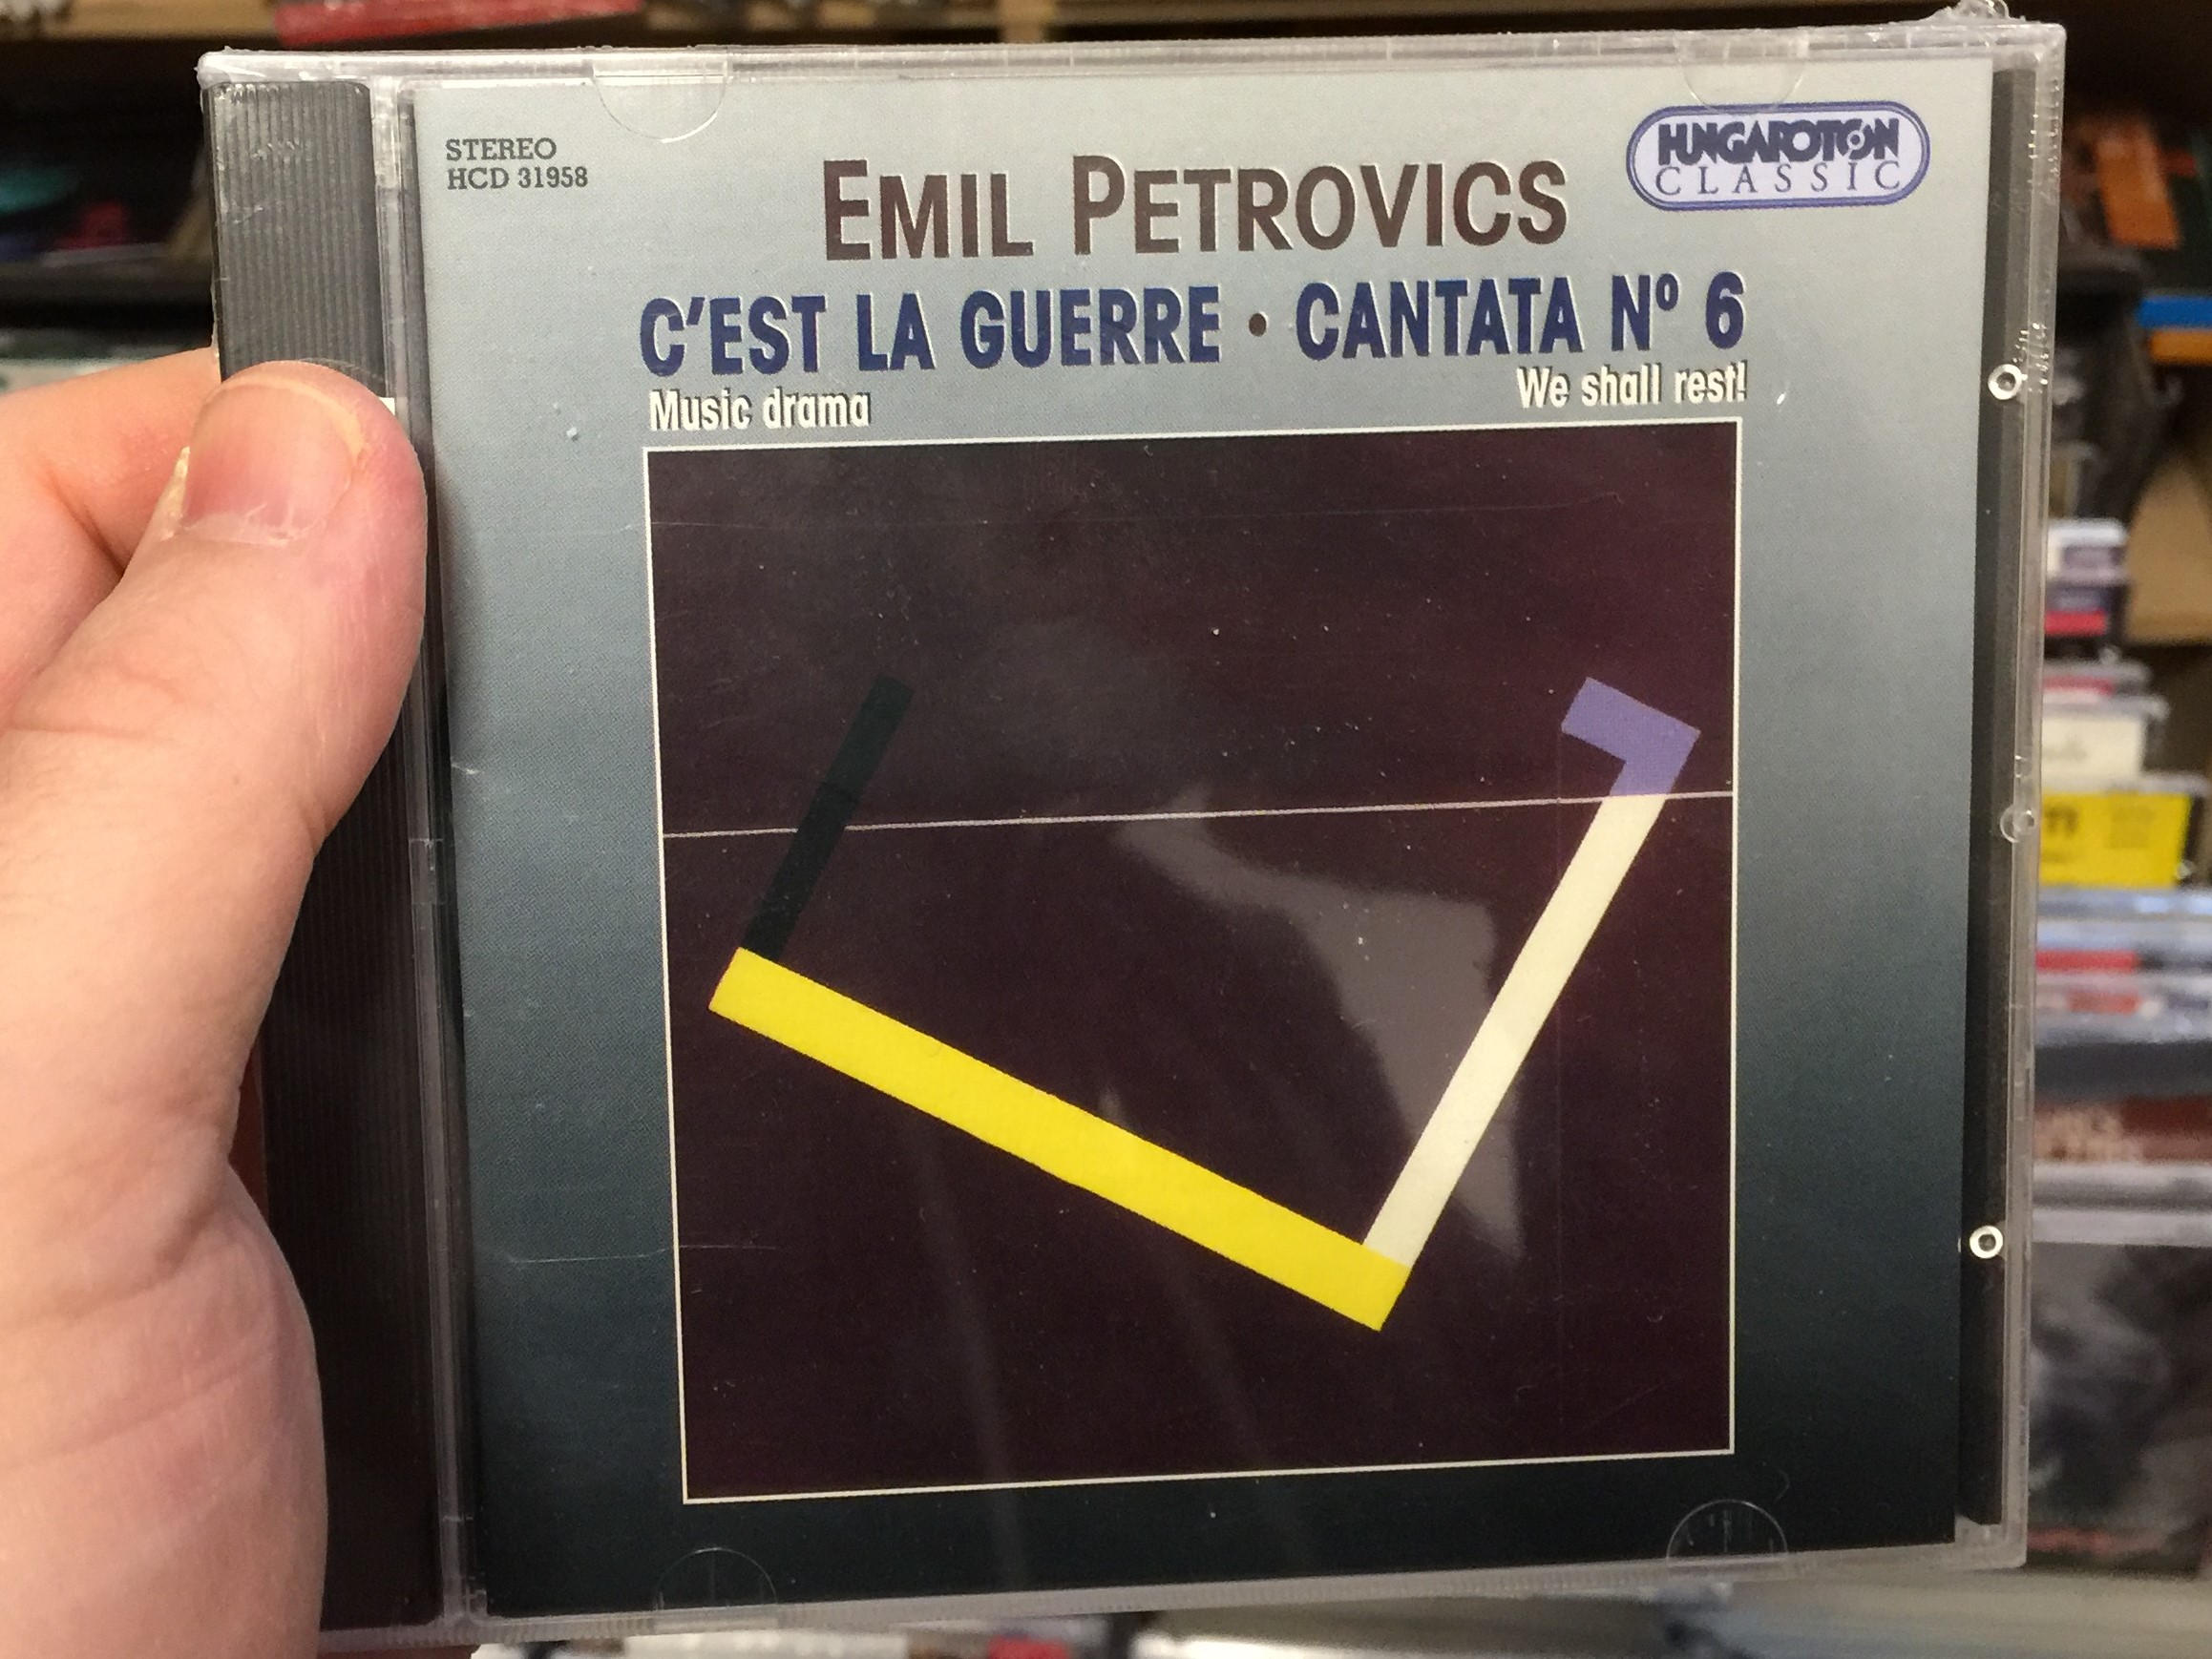 emil-petrovics-c-est-la-guerre-cantata-no.-6-music-drama-we-shall-rest-hungaroton-classic-audio-cd-2000-stereo-hcd-31958-1-.jpg